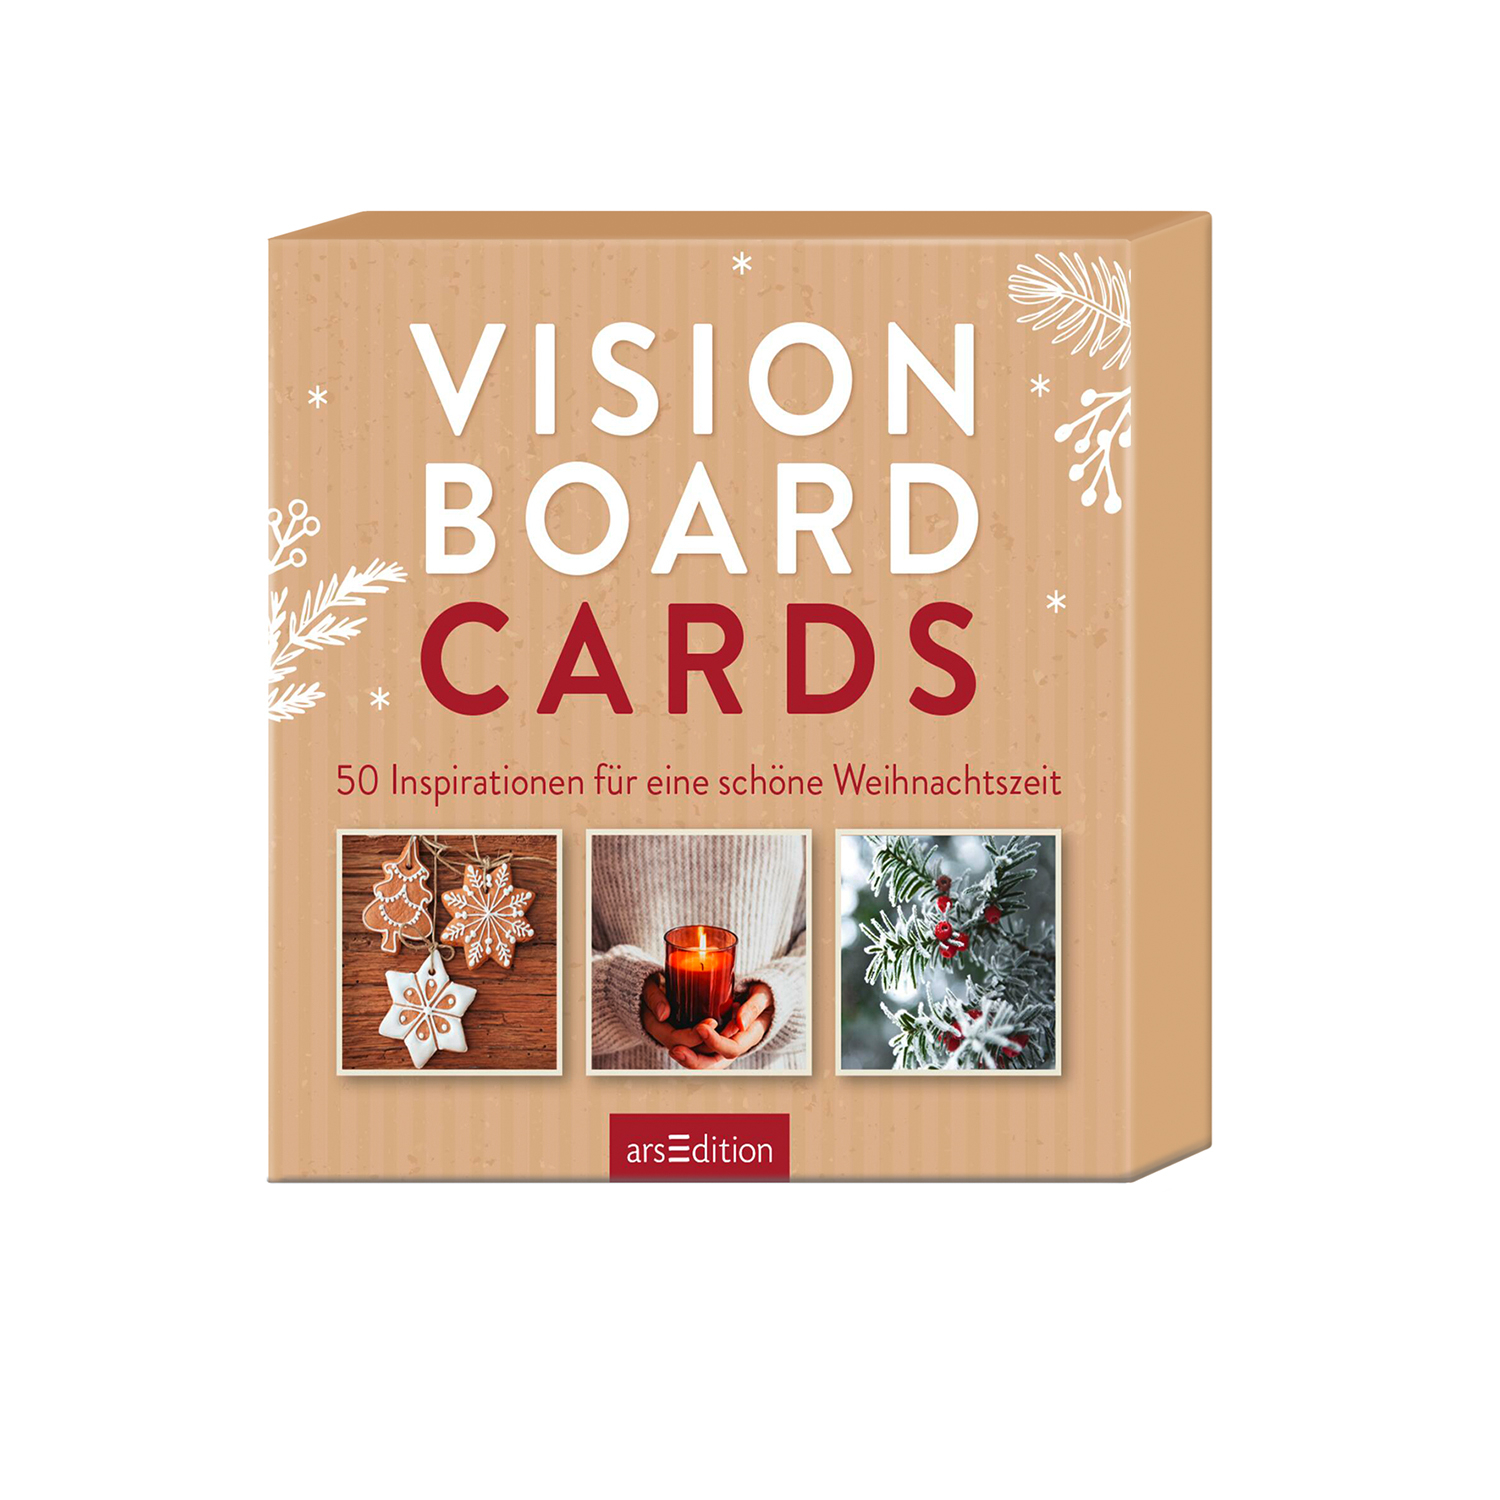 Vision Board Cards kaufen